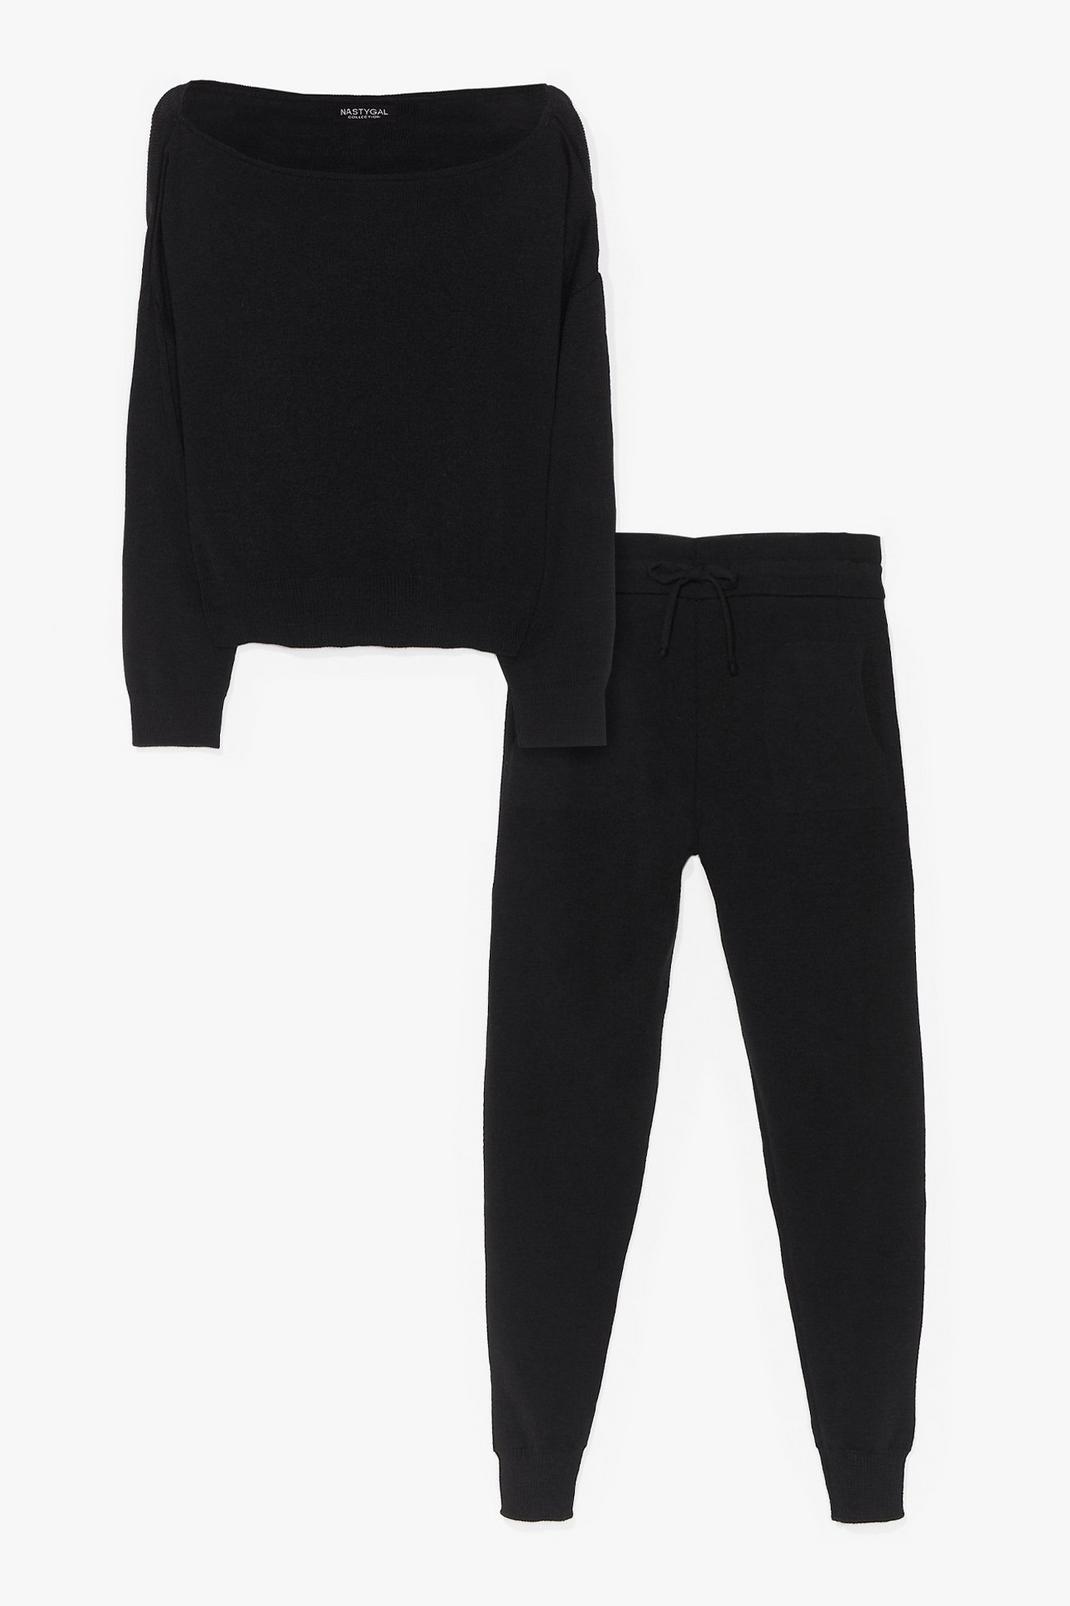 Black Soft Knit SweatTrousers Loungewear Set image number 1